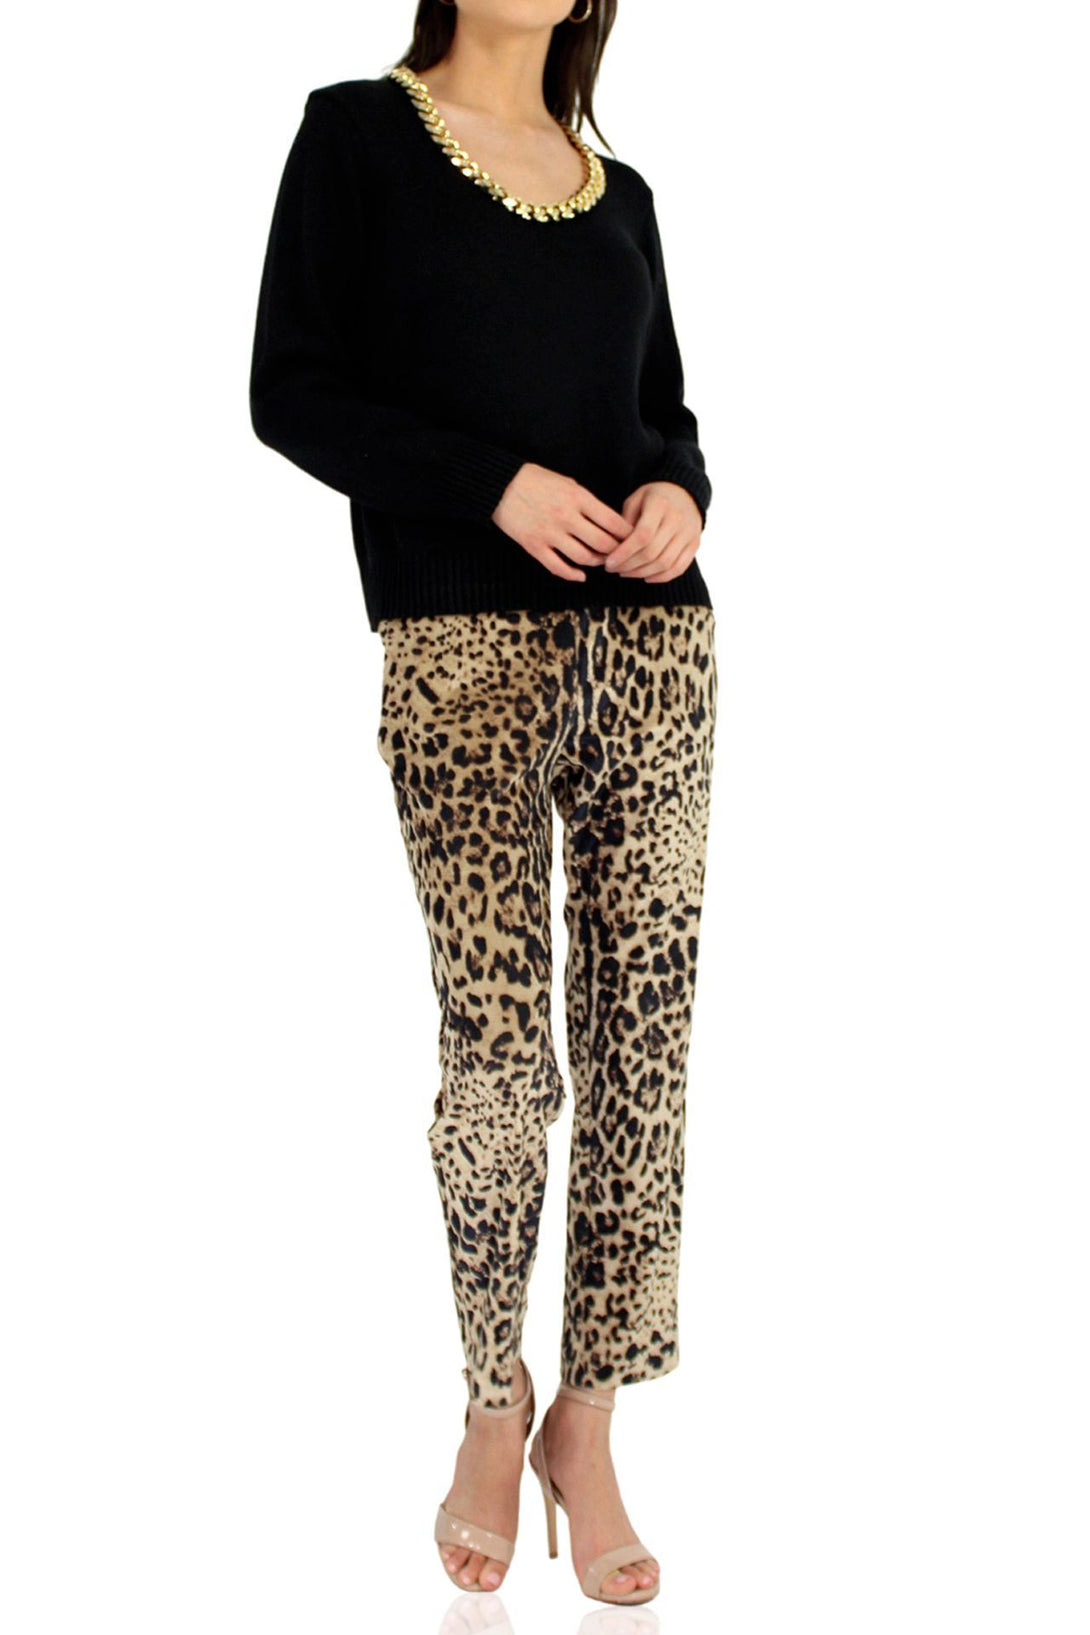 Leopard-Print-Designer-Women-Pants-From-Kyle